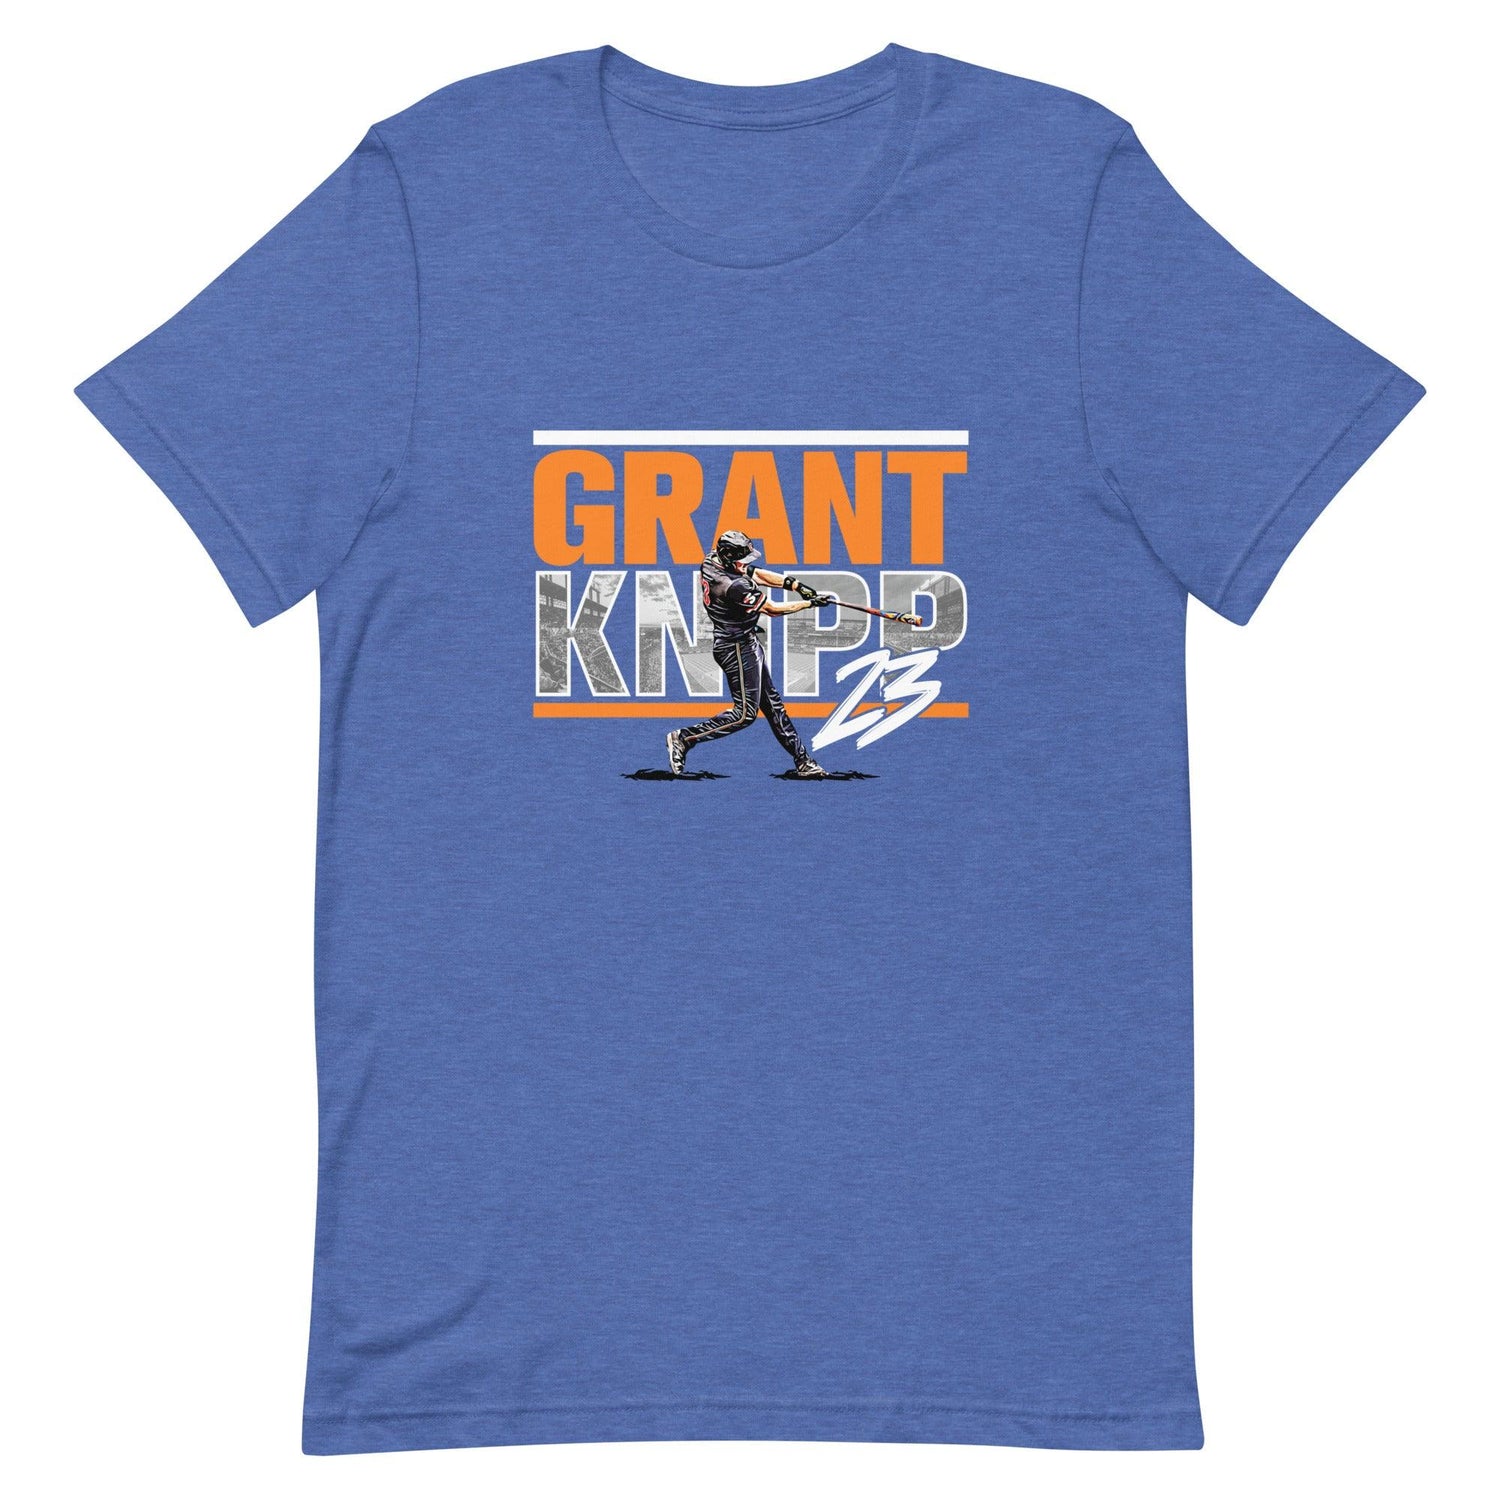 Grant Knipp "Gameday" t-shirt - Fan Arch